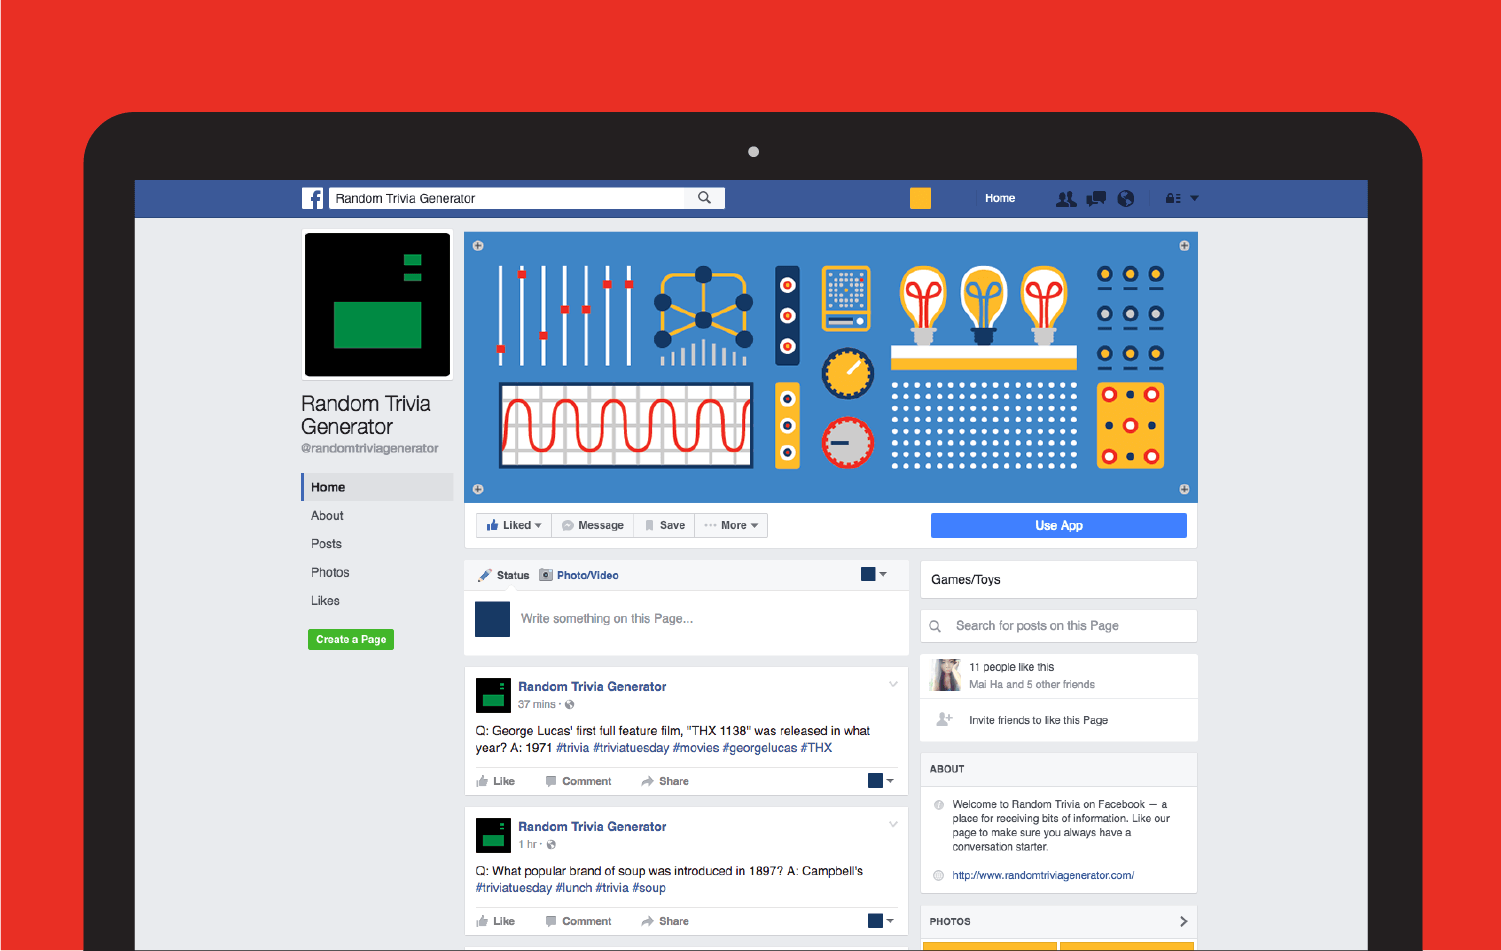 facebook profile page